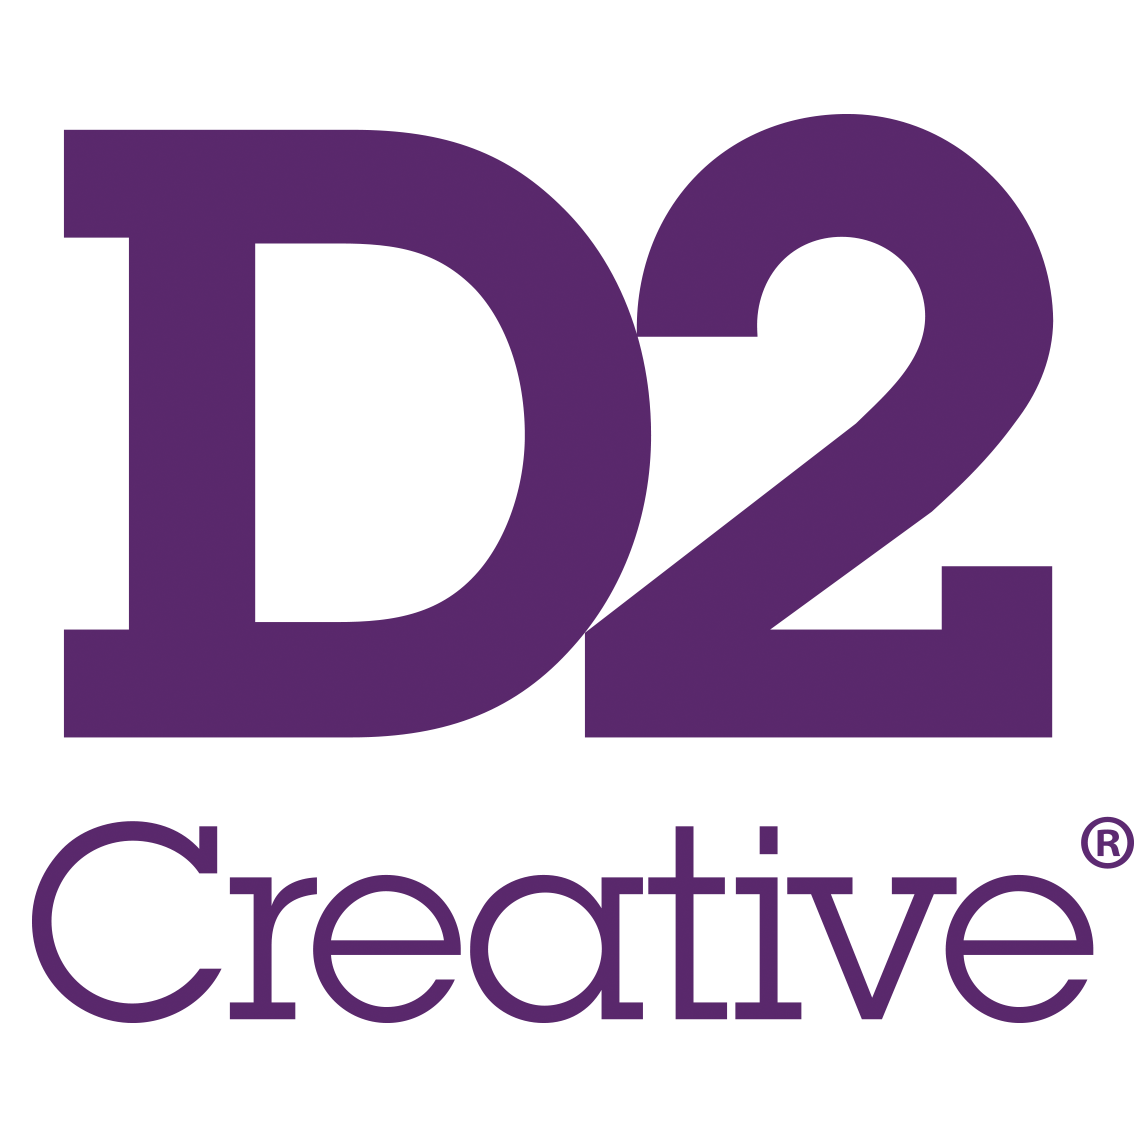 D2 Creative - Brand marketing agency, Ampthill, Bedfordshire.